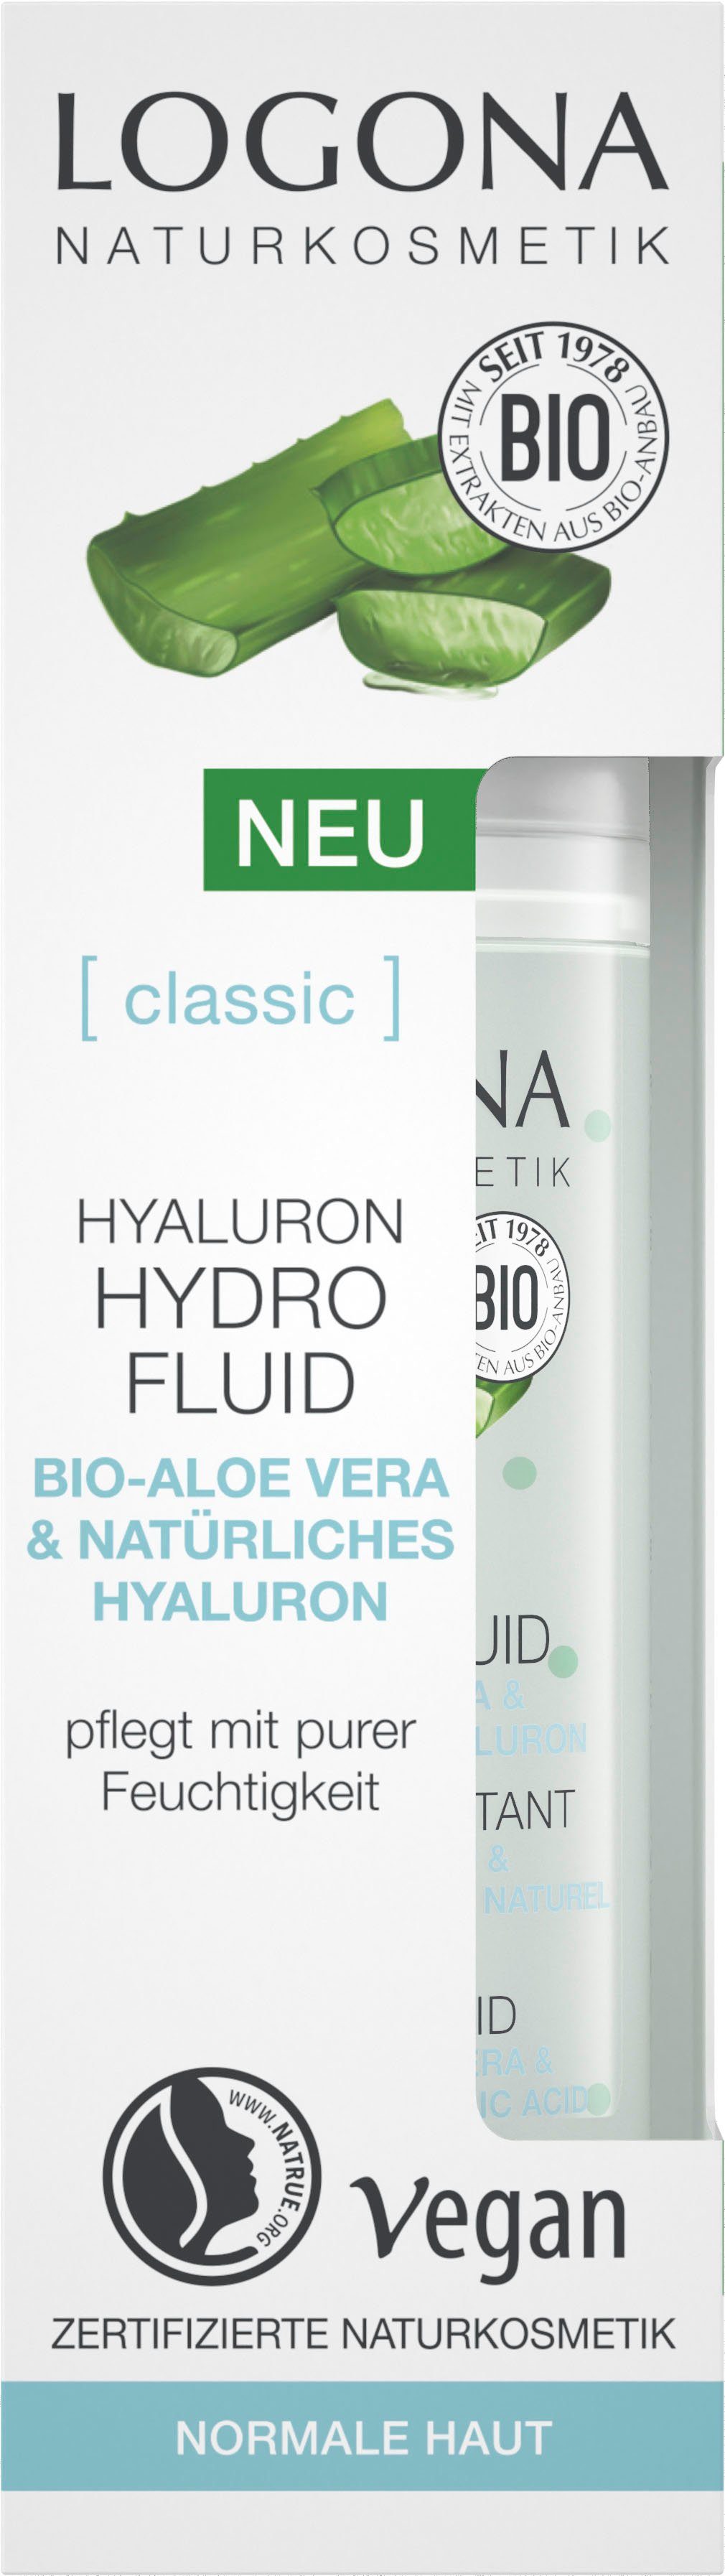 Hyaluron Fluid Logona LOGONA Hydro [classic] Gesichtsfluid